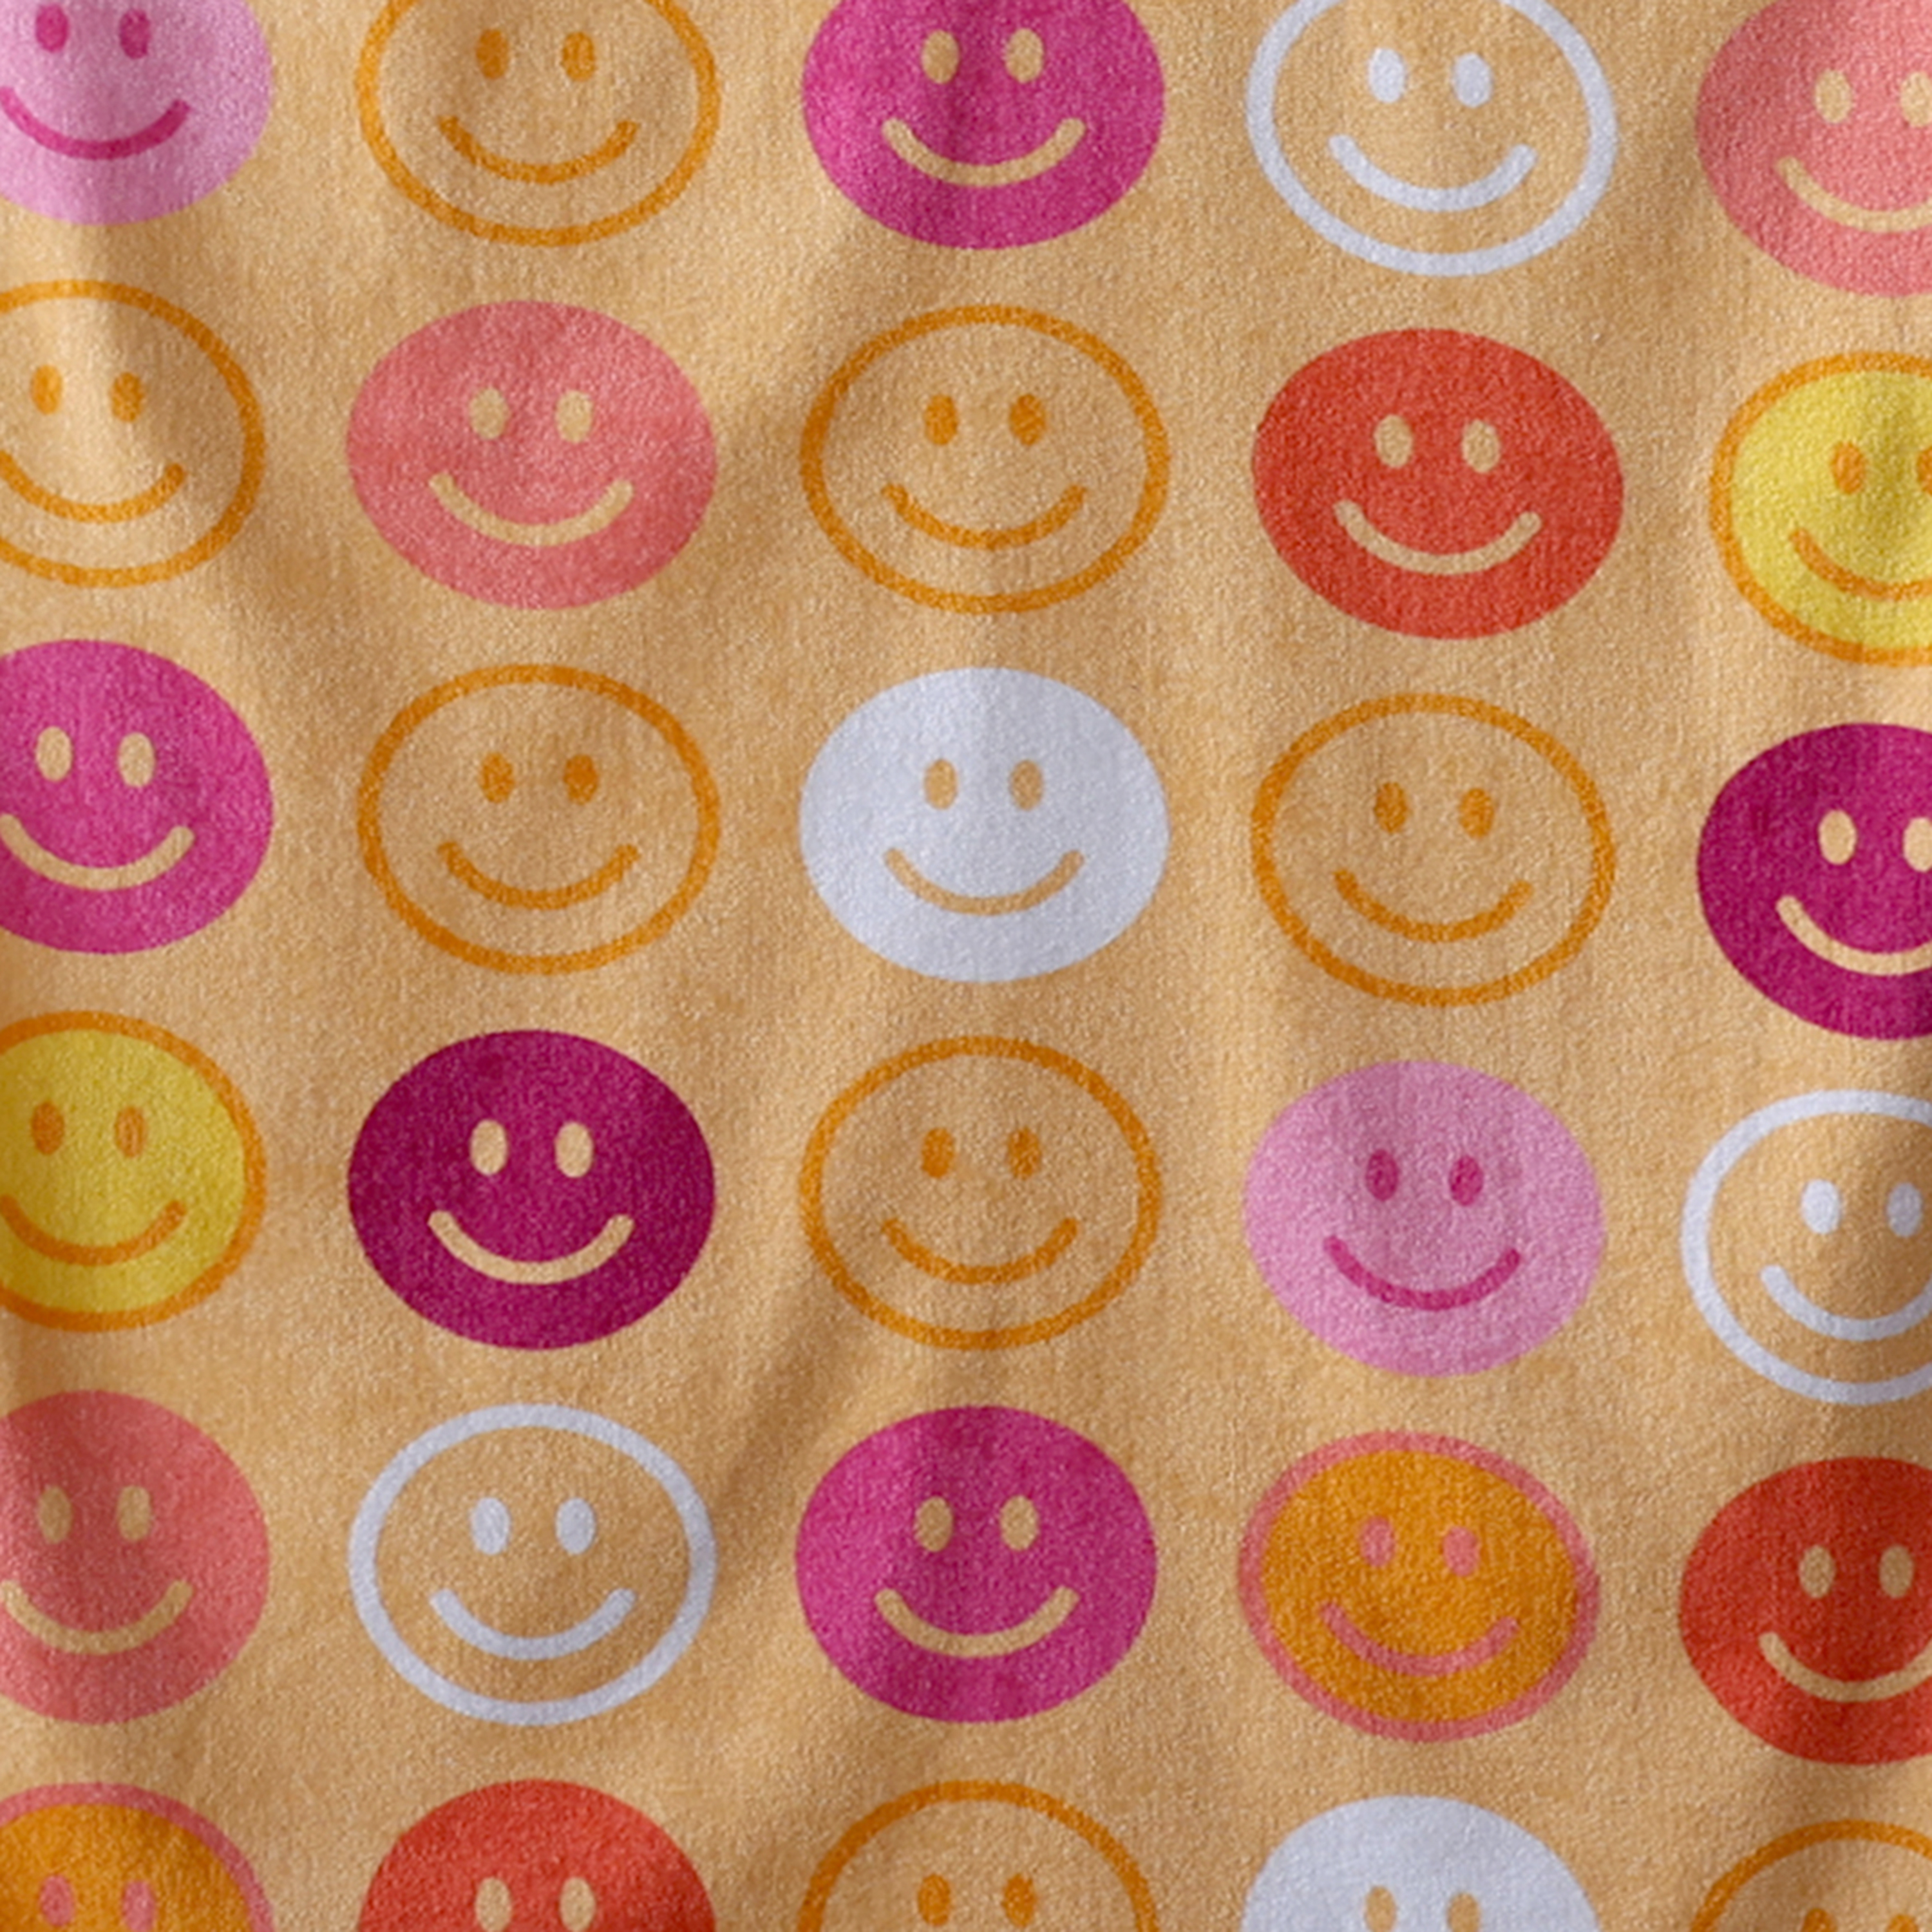 Mainstays Velour Beach Towel, Smiley, Orange, 28x60 - image 5 of 5